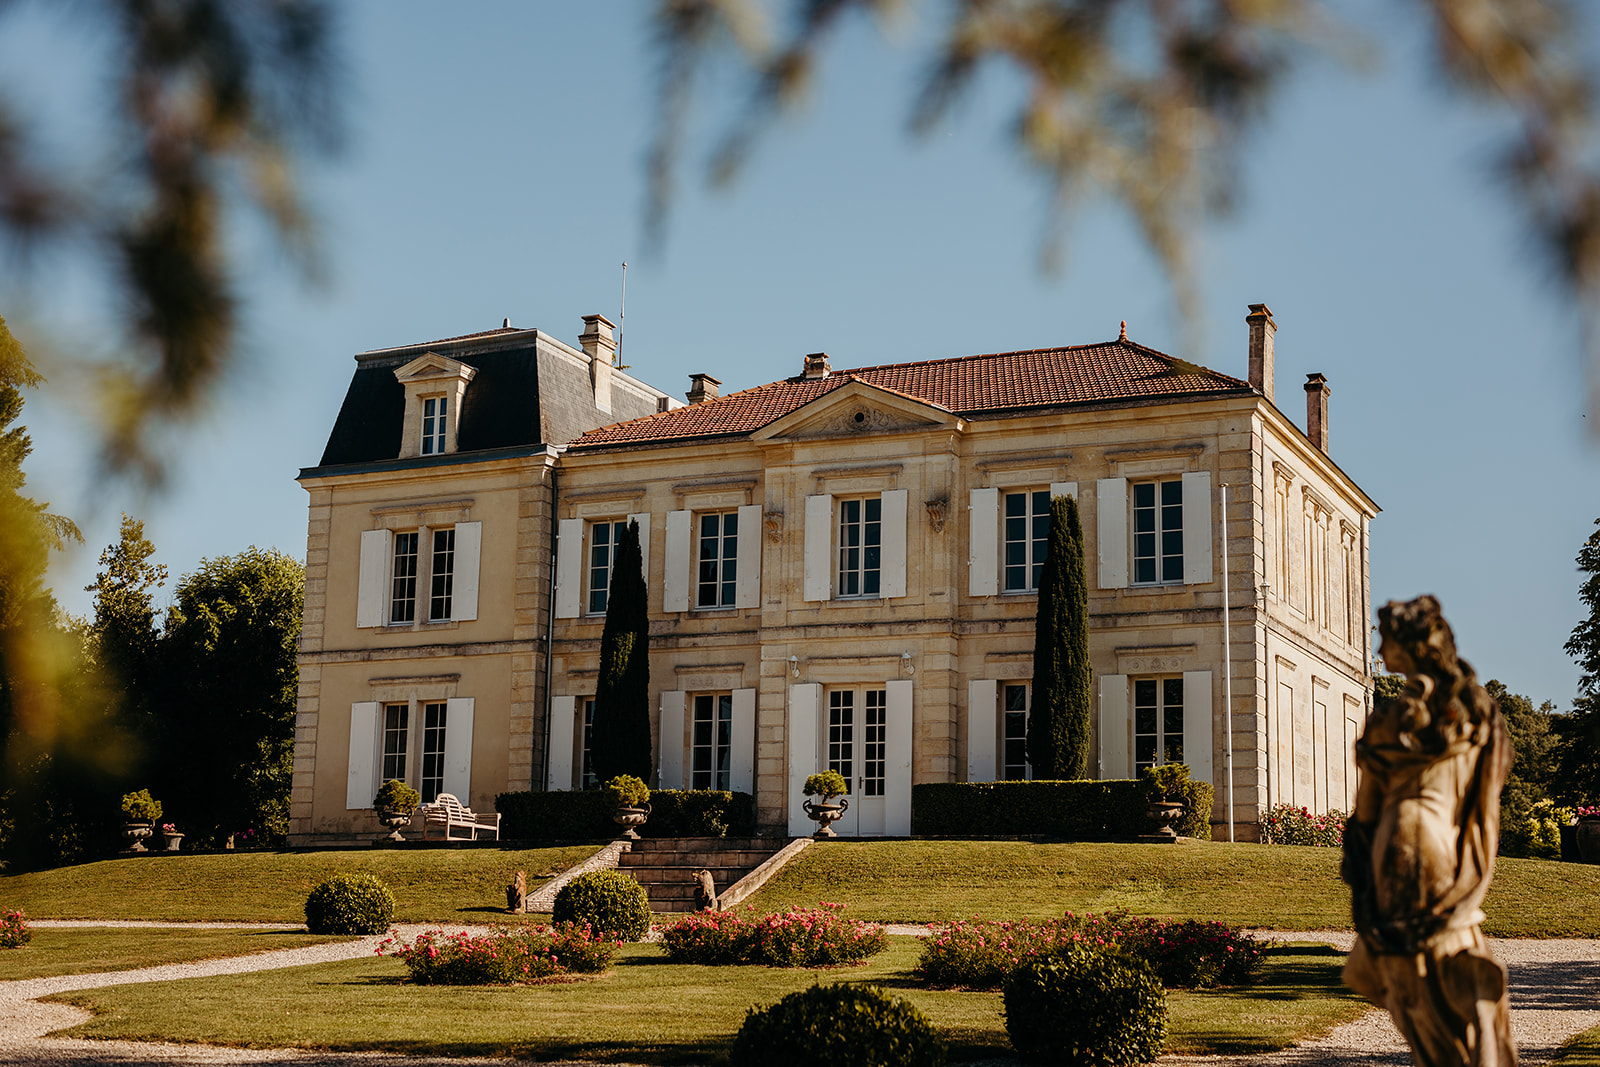 Chateau de Garde in South west France